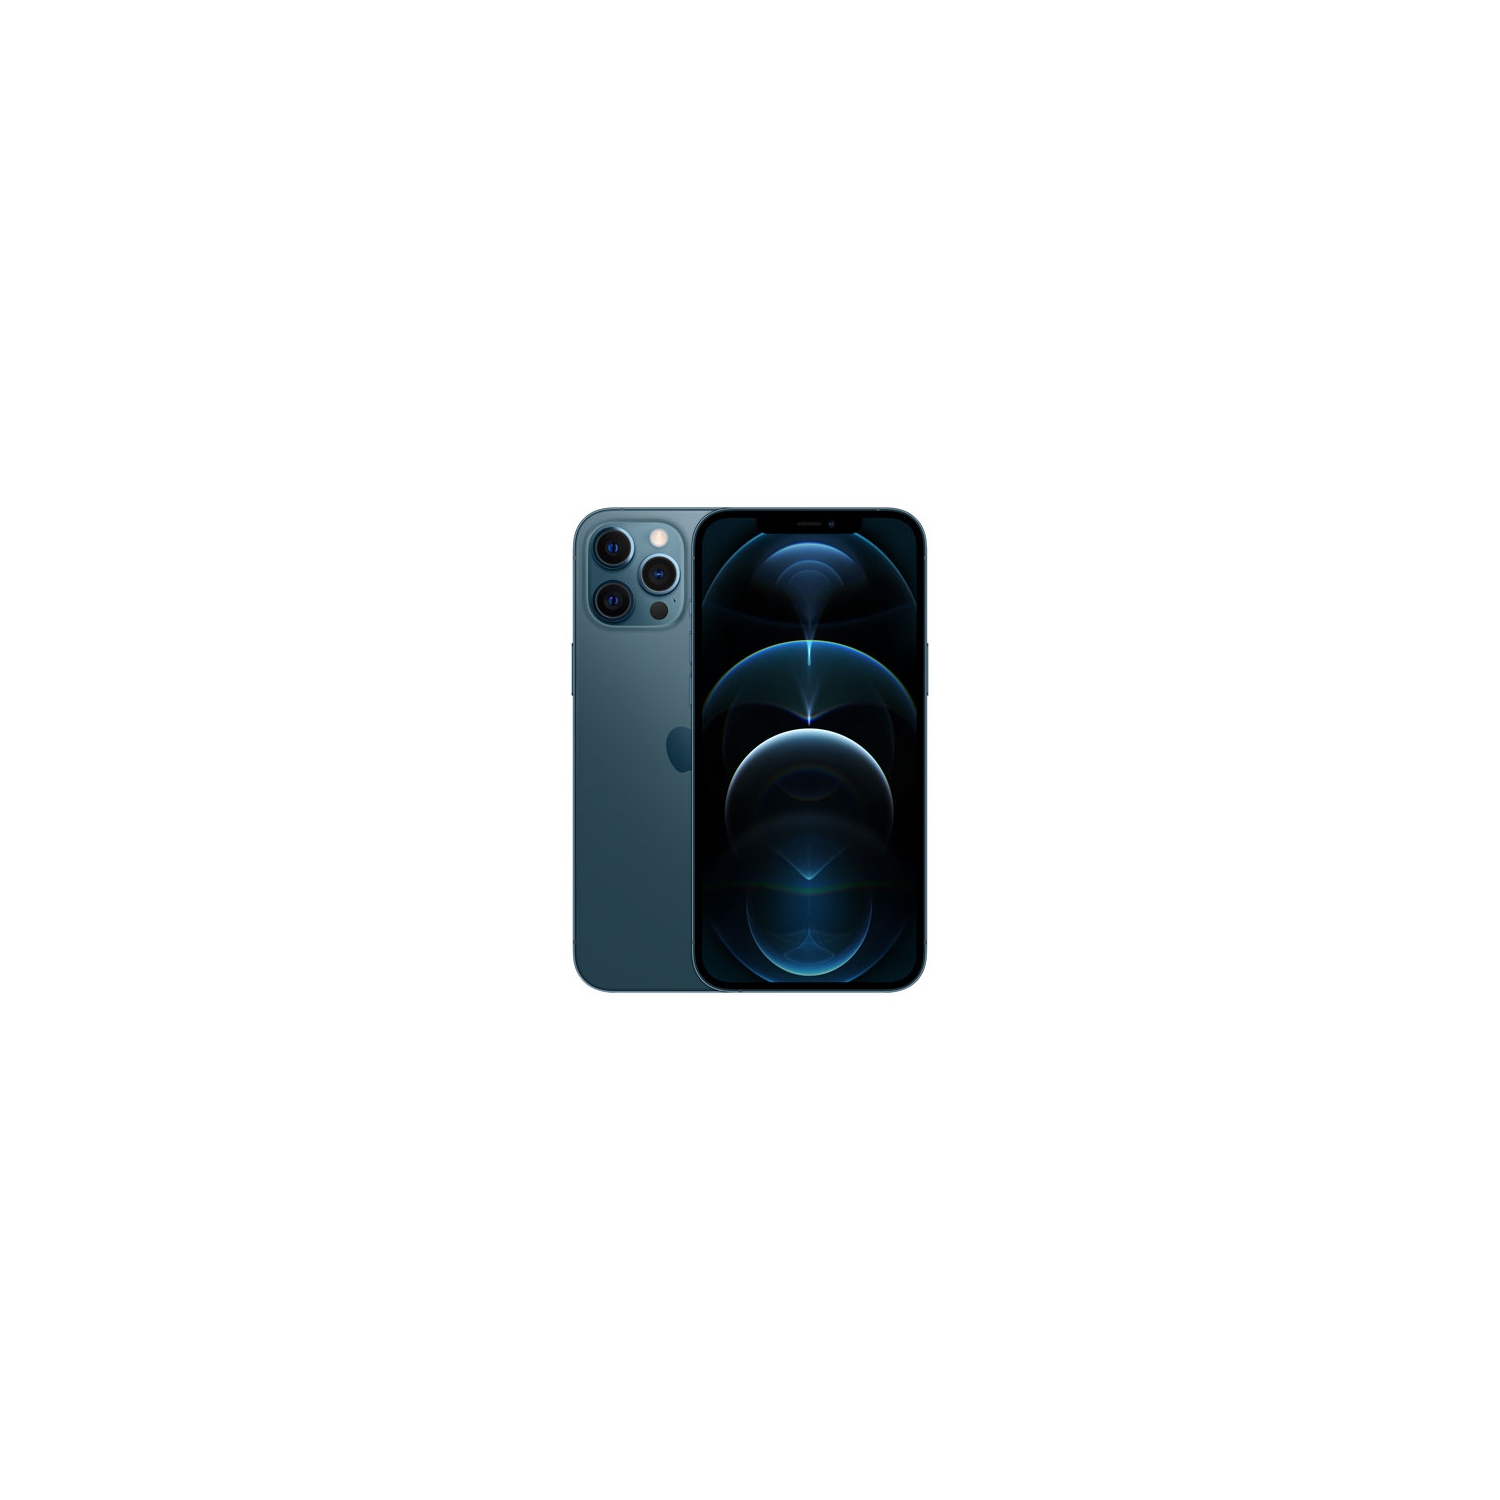 Apple iPhone 12 Pro Max 256GB Smartphone - Pacific Blue - Unlocked - Open Box